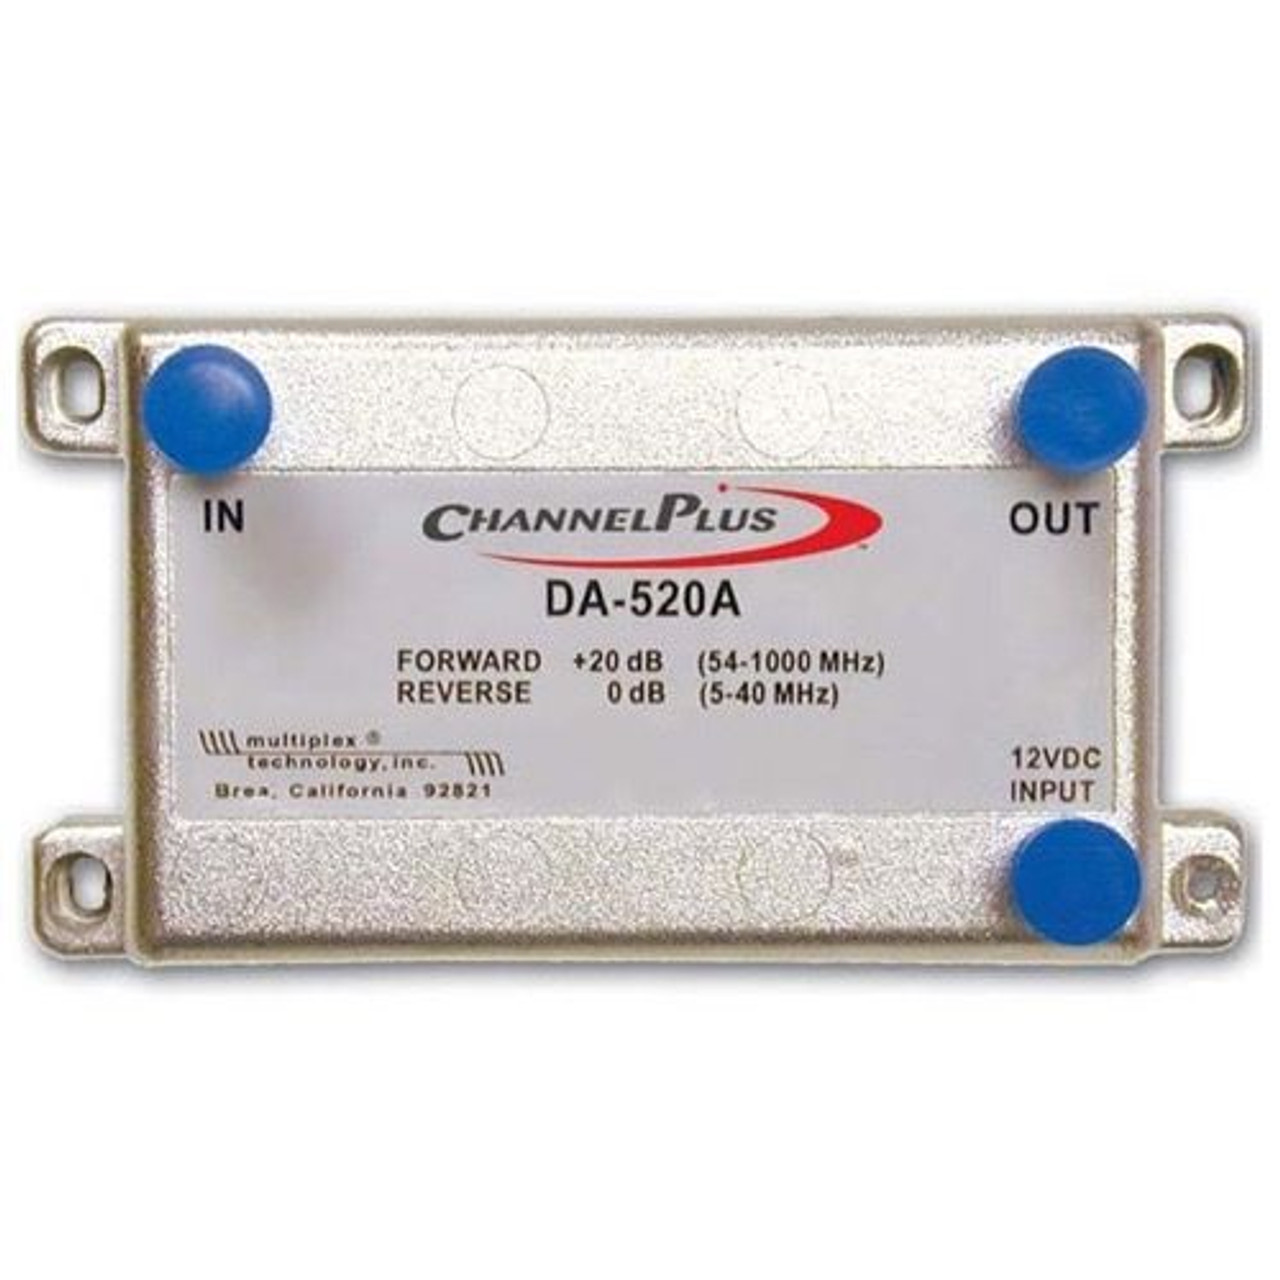 Channel Plus DA-520A Bi-Directional 20 dB RF Amplifier FRWD / ODB Reverse Cable Coaxial Signal 54 MHz - 1 GHz Forward Bandwidth for CATV, Part # DA520-A